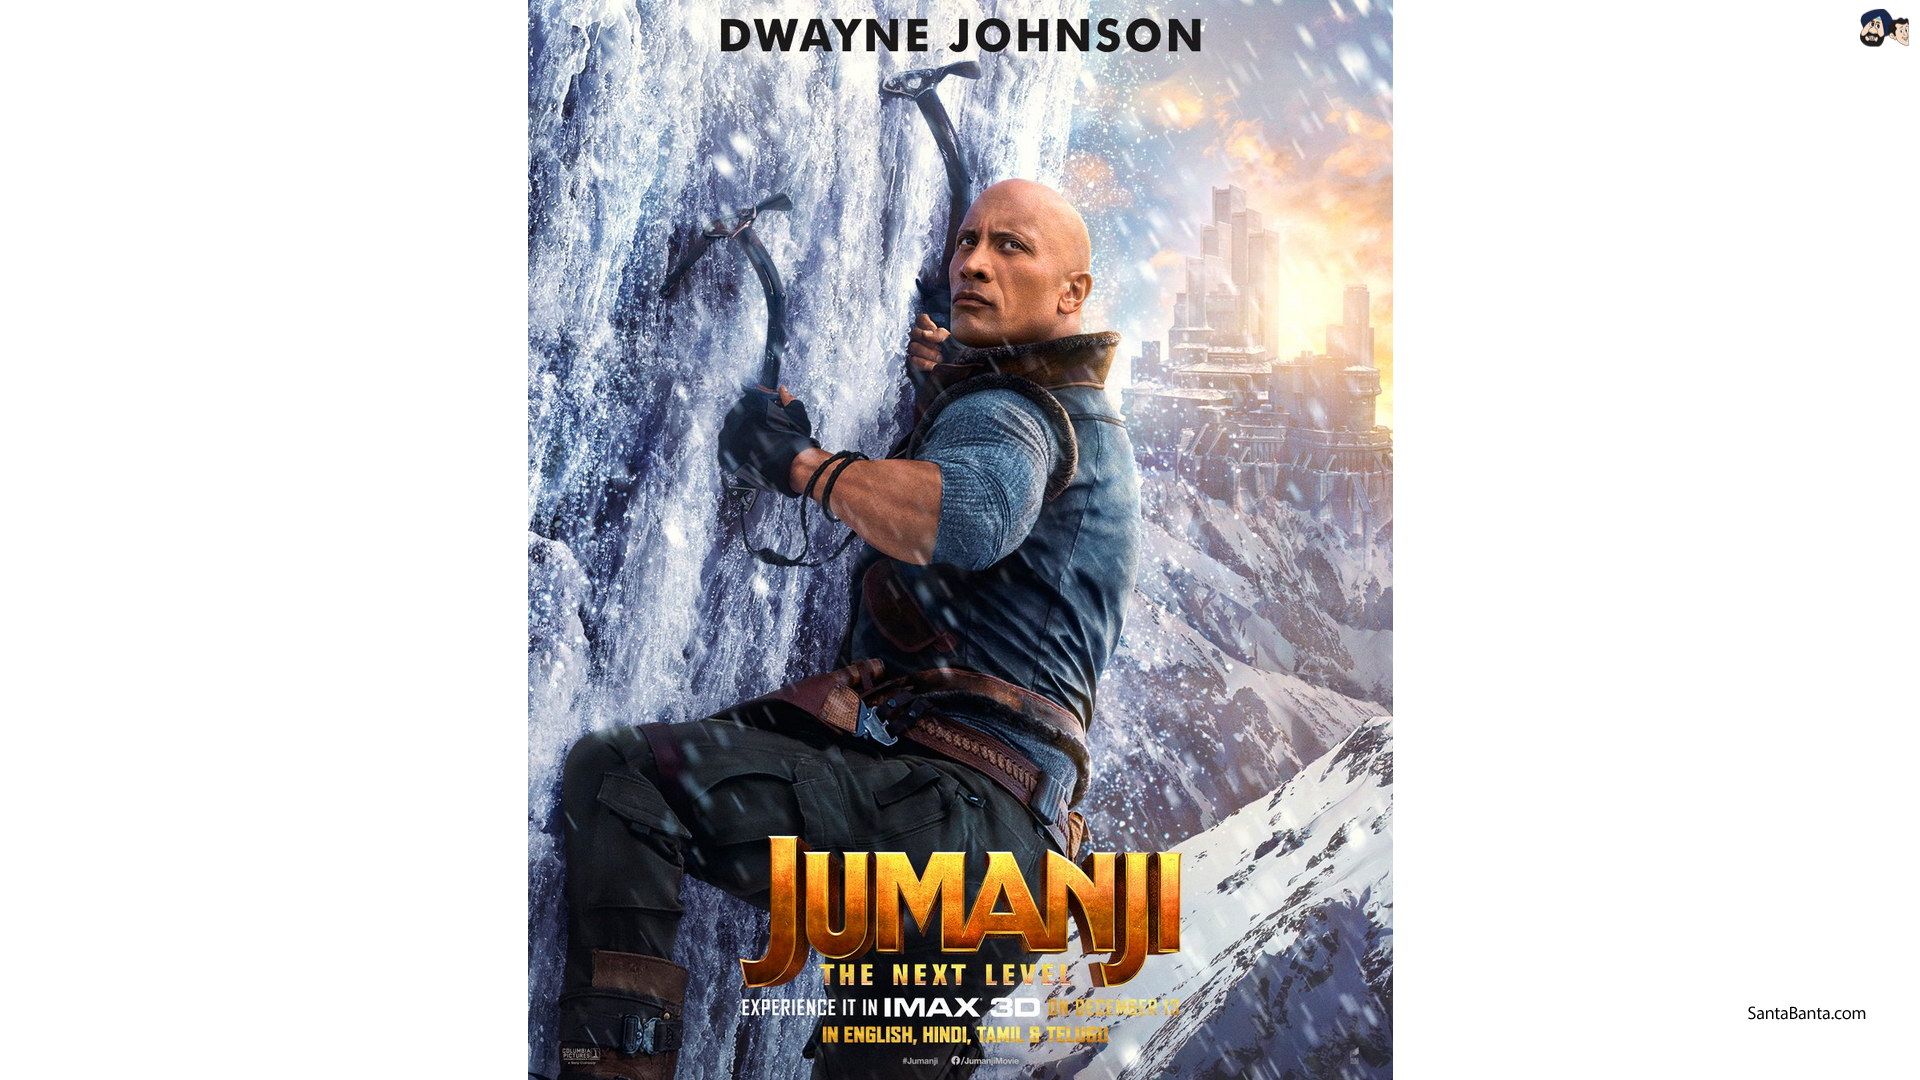 Fantasy adventure movie, Jumanji: The Next Level starring Dwayne